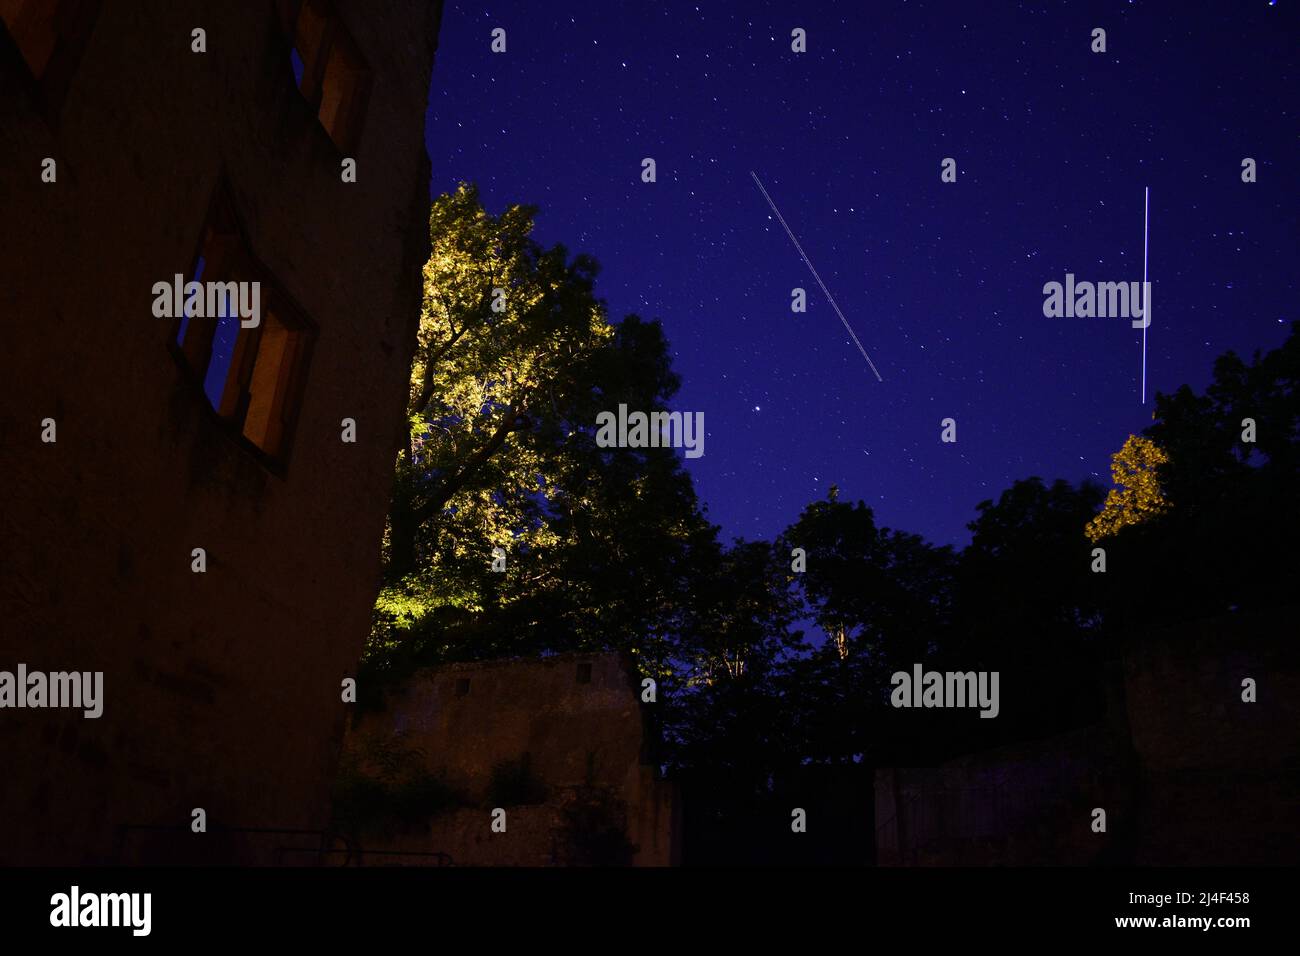 Stars, Castle, Ruin, Starry Sky, Starry Night, Ruine, Turm, Nachthimmel, Night Sky, Astro Photography, Satellite, Starlink, SpaceX, Light pollution Stock Photo